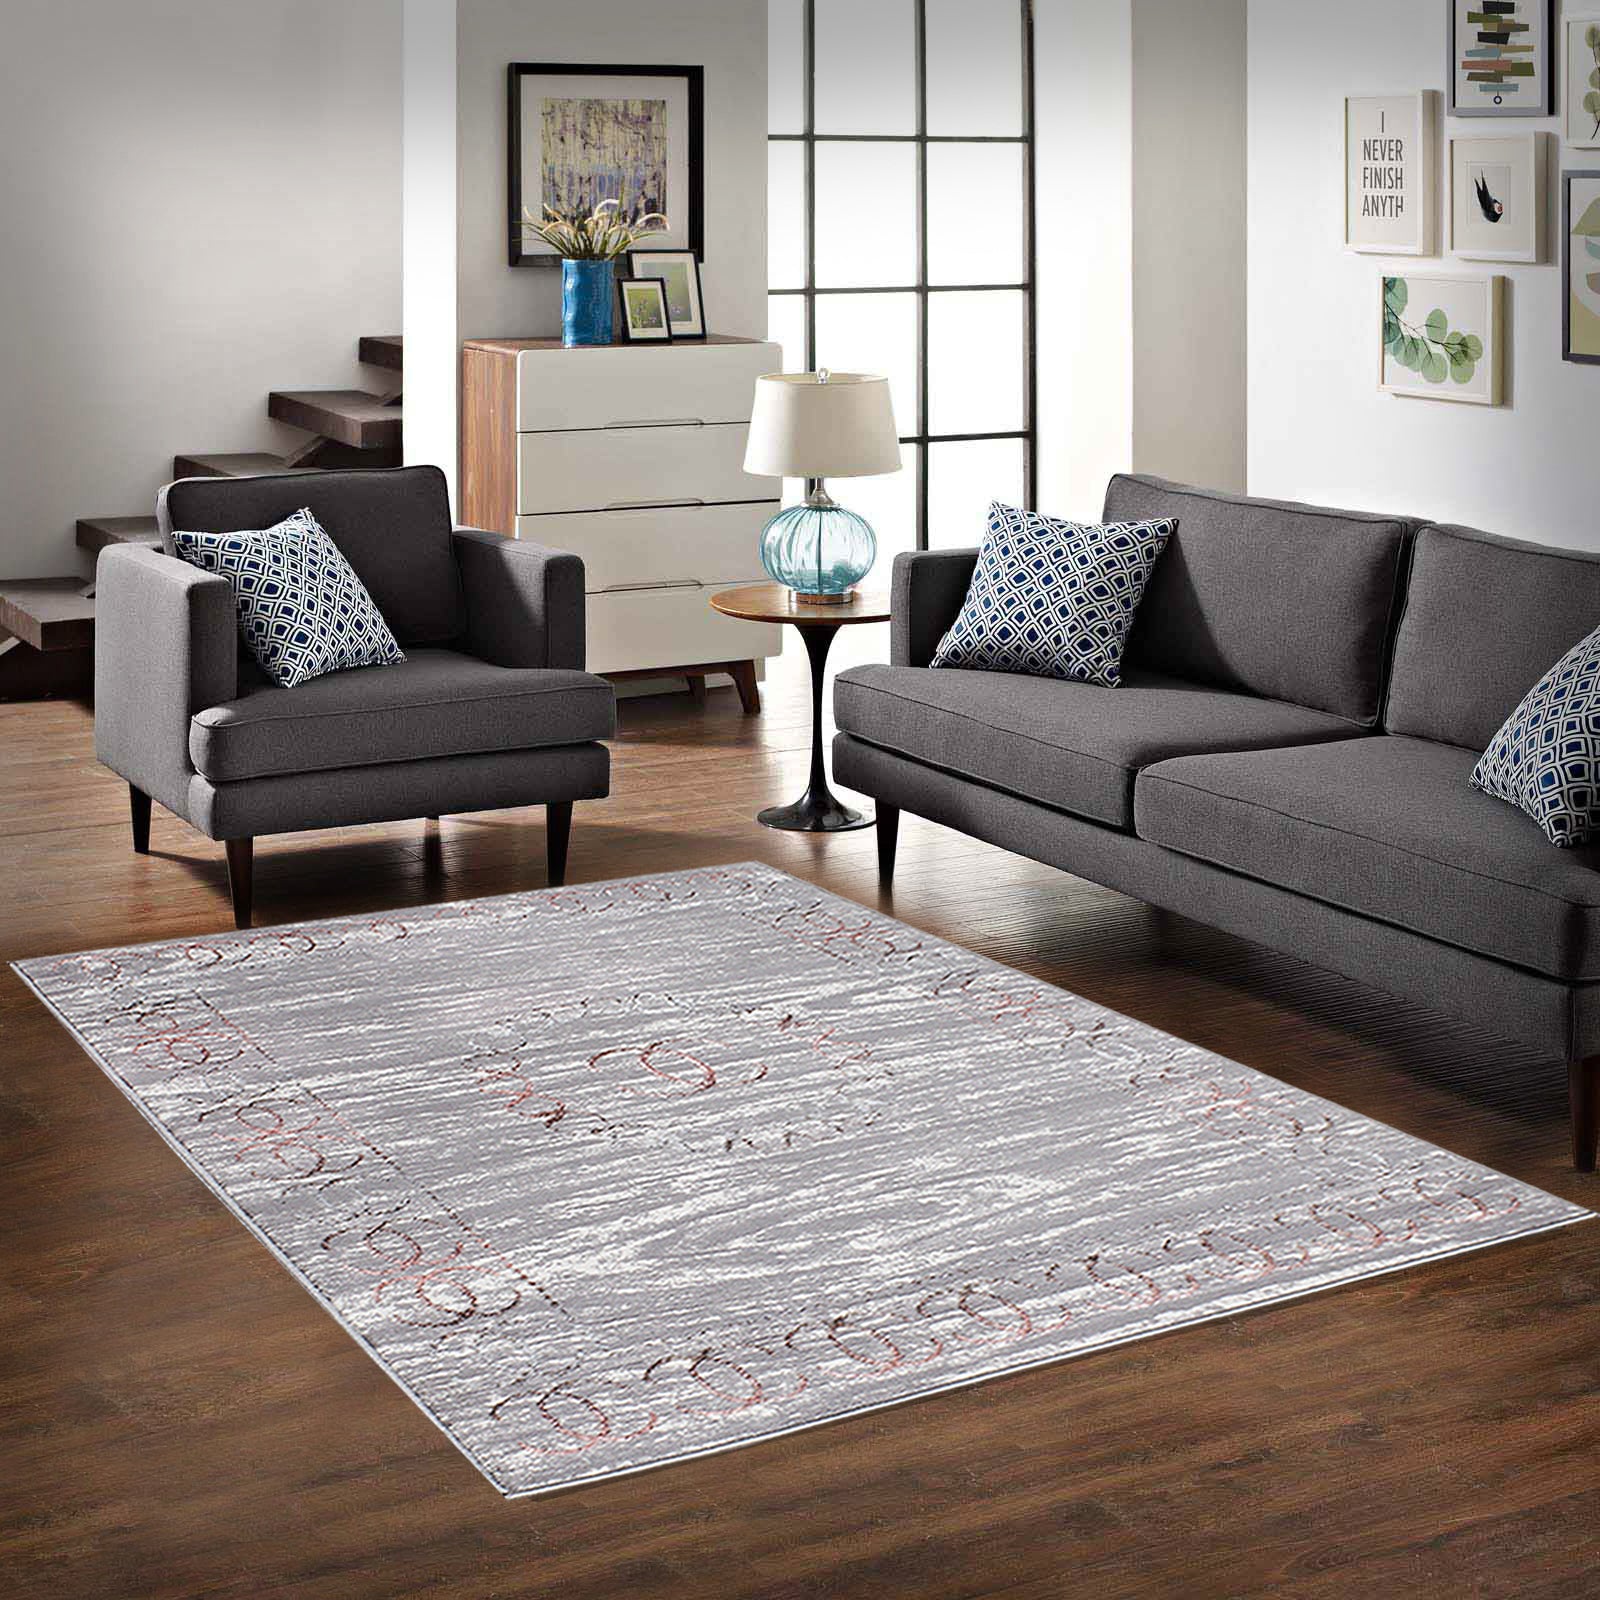 Bodrum Channel Carpet 1600mm X 2200mm - Grey